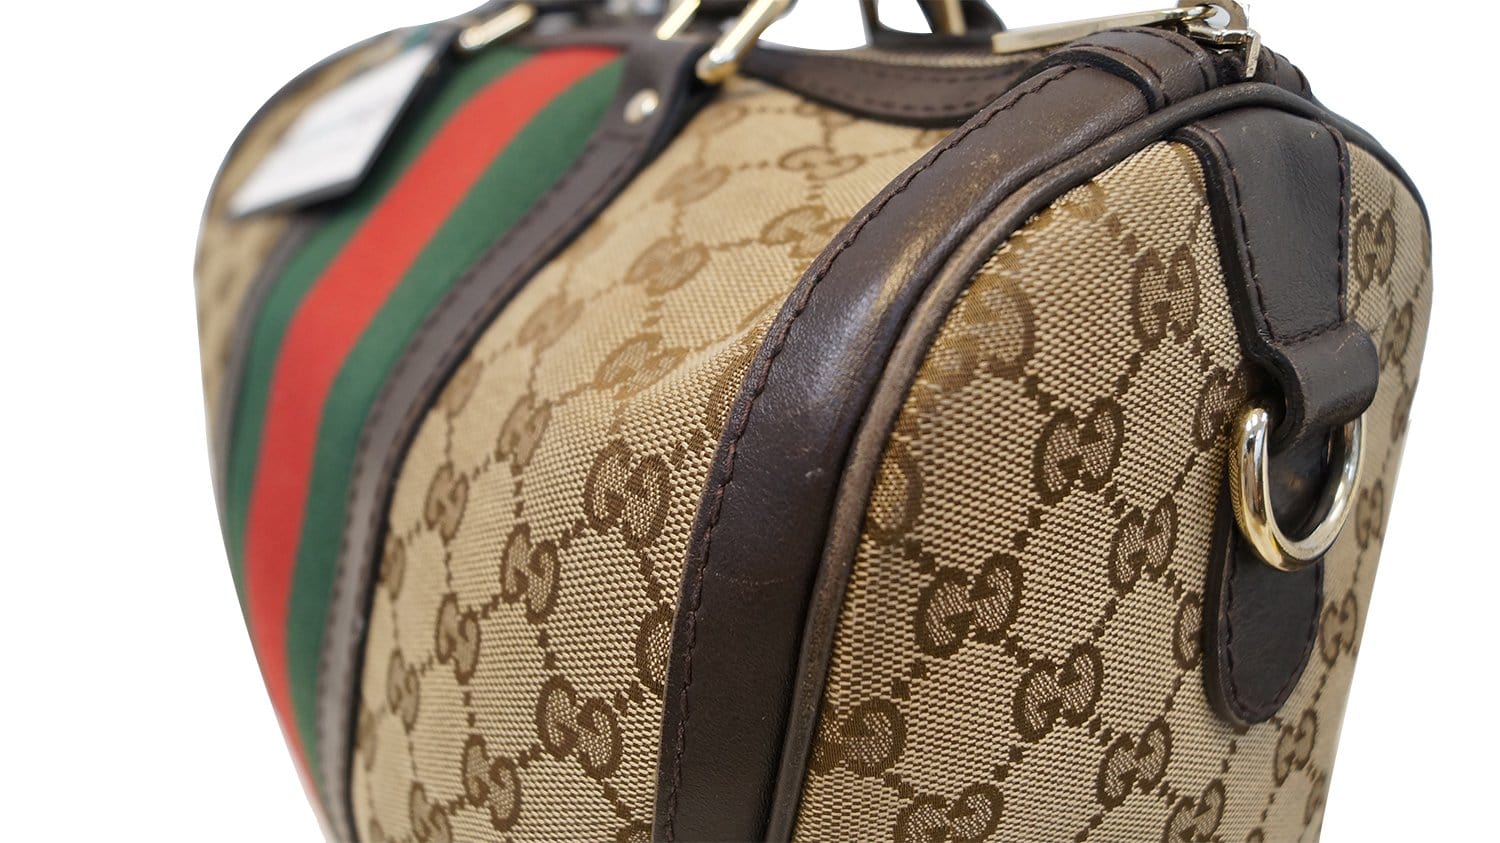 Gucci, Bags, Authentic Gucci Speedy Purse